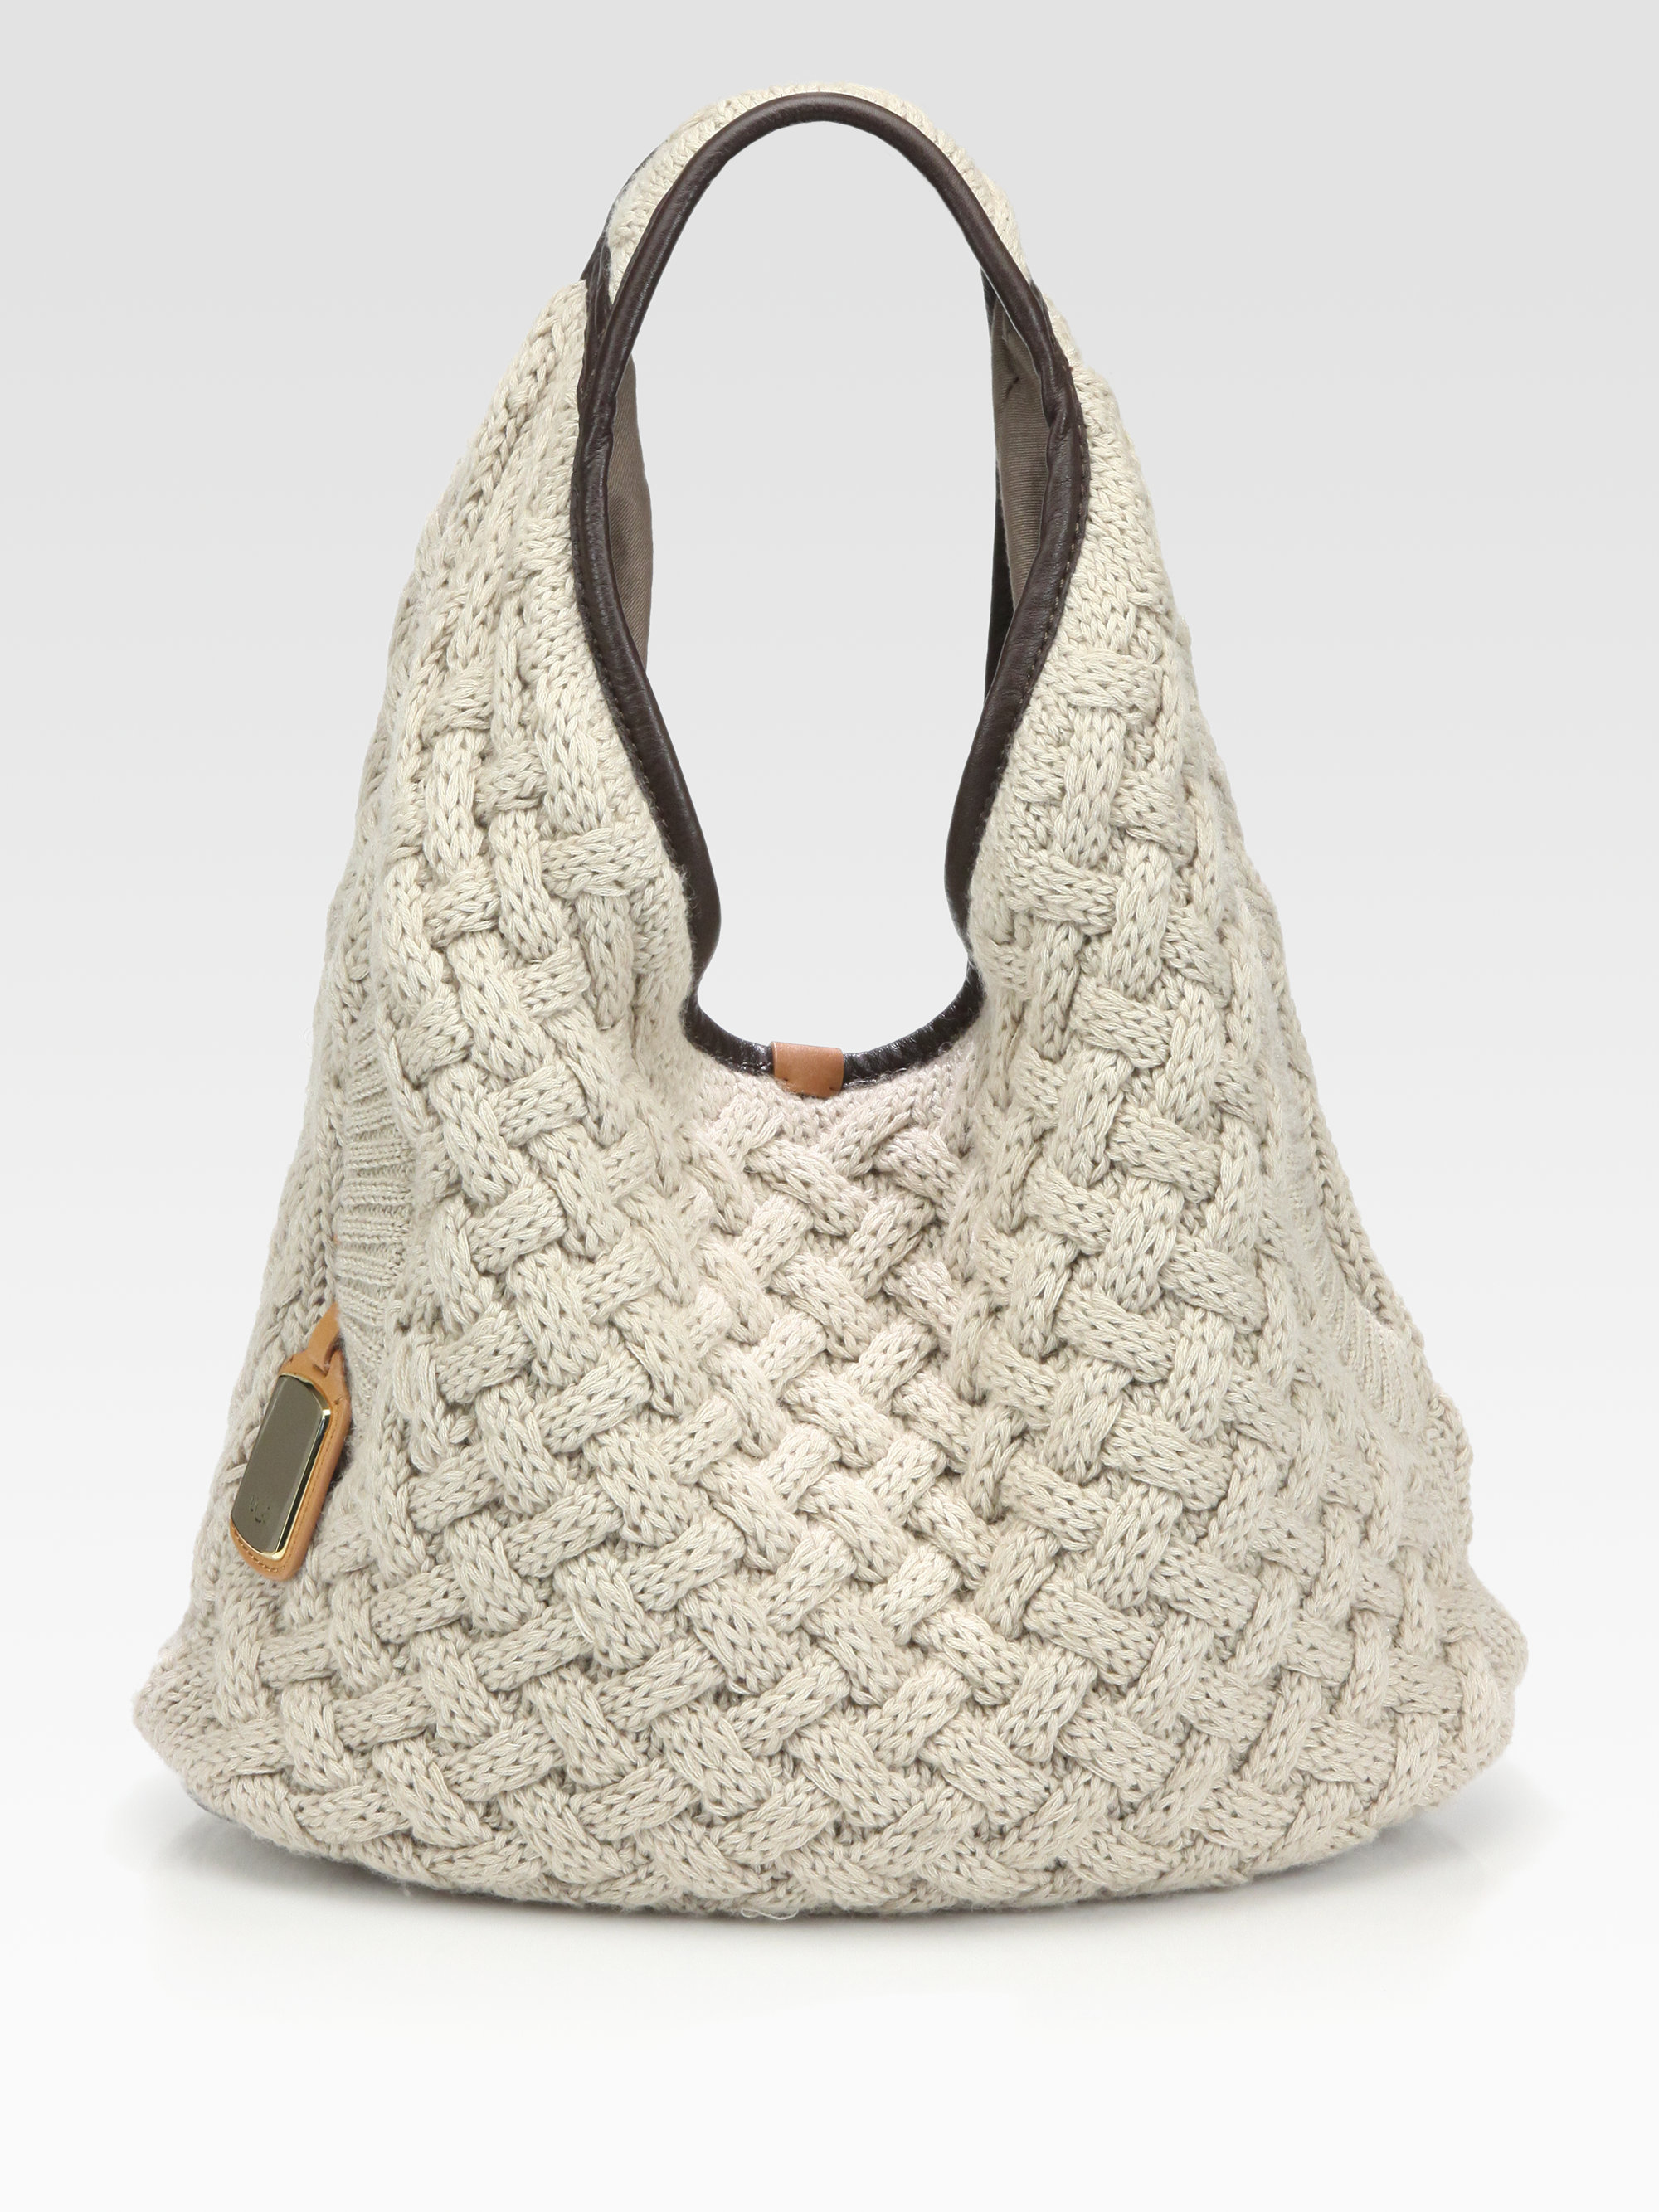 UGG Knit Wool Hobo Bag in Beige (Natural) - Lyst